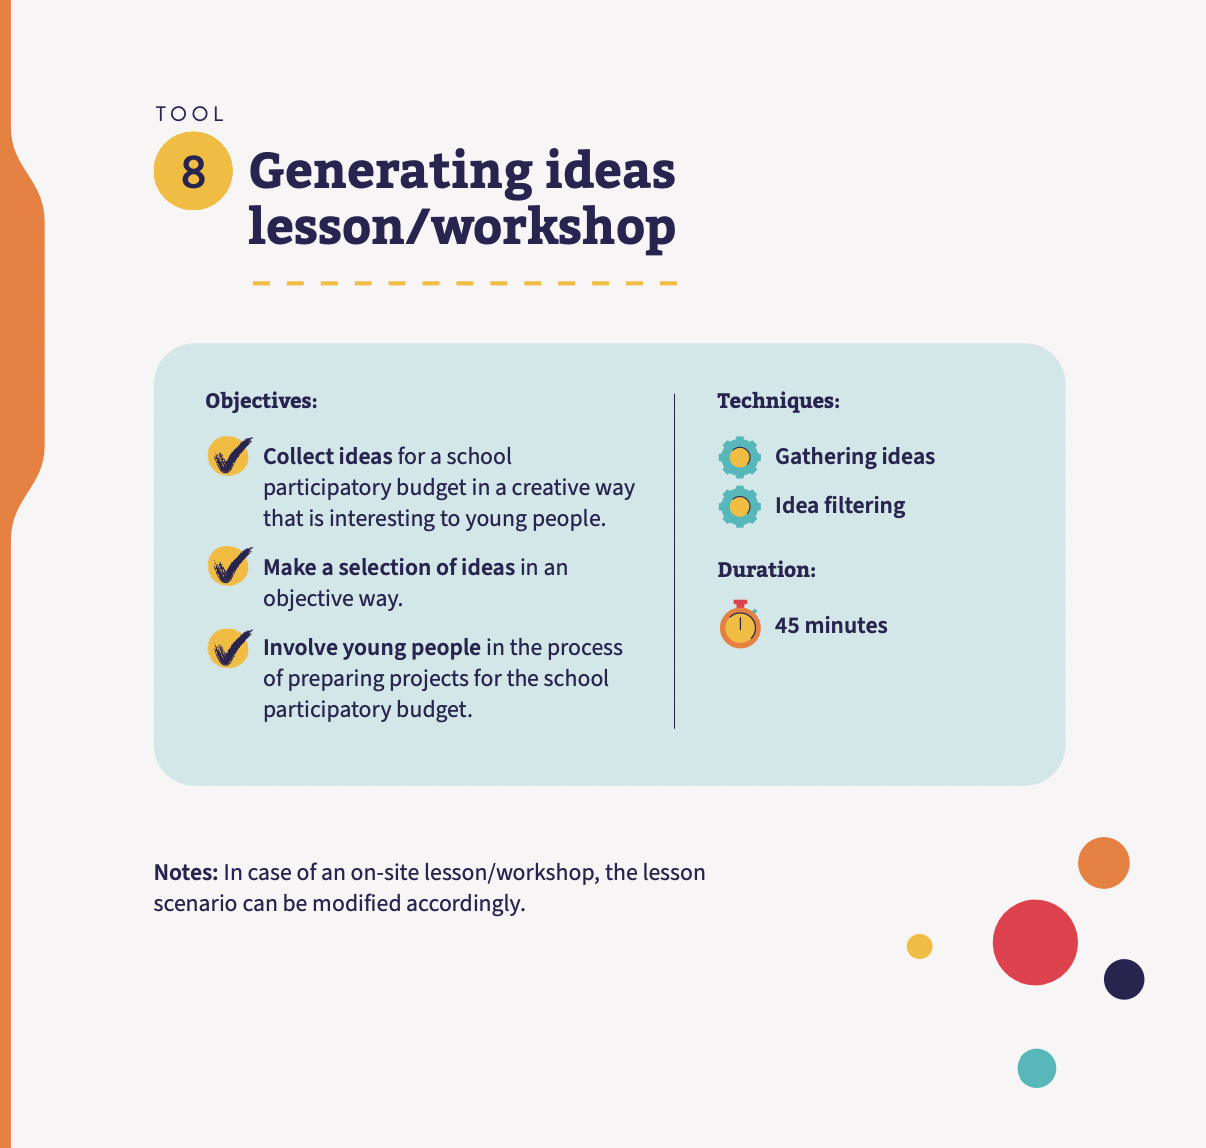 Tool 8: Generating ideas lesson/workshop